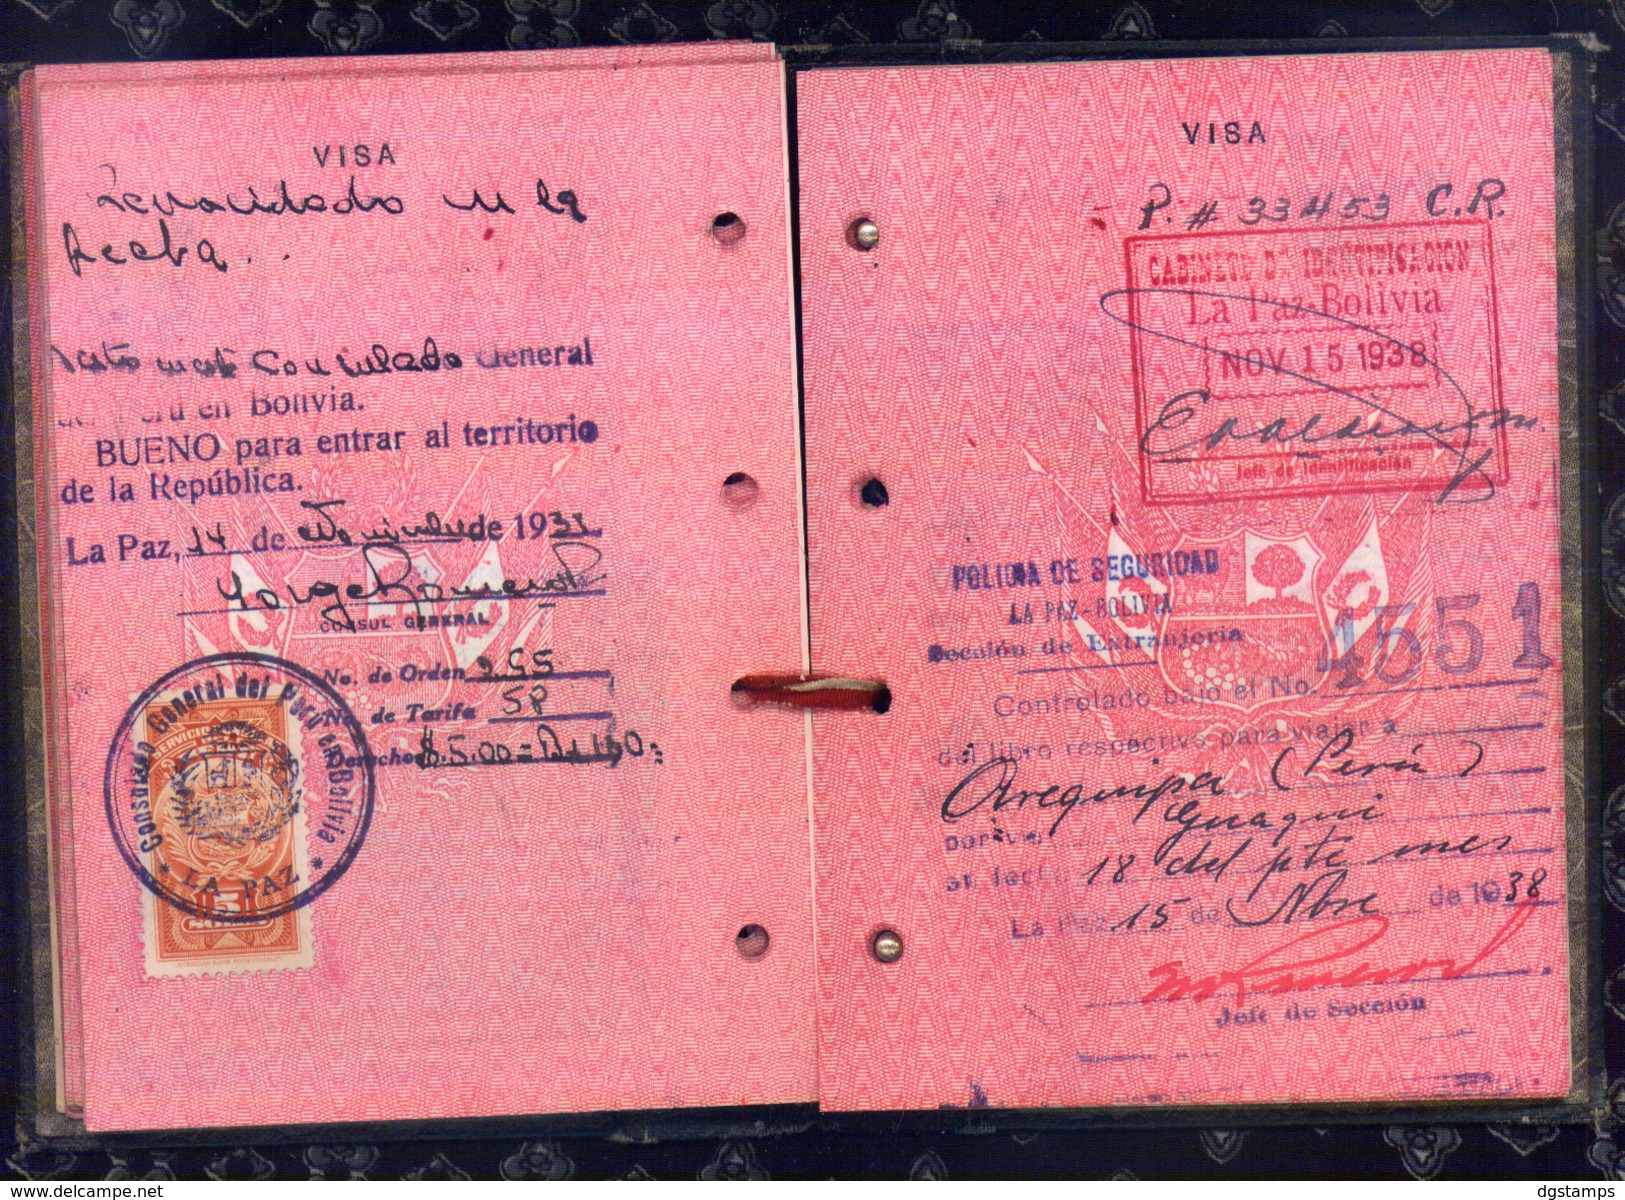 Bolivia-Peru 1928-1938 Pasaporte peruano en La Paz. 26 sellos. 17sc. See desc.